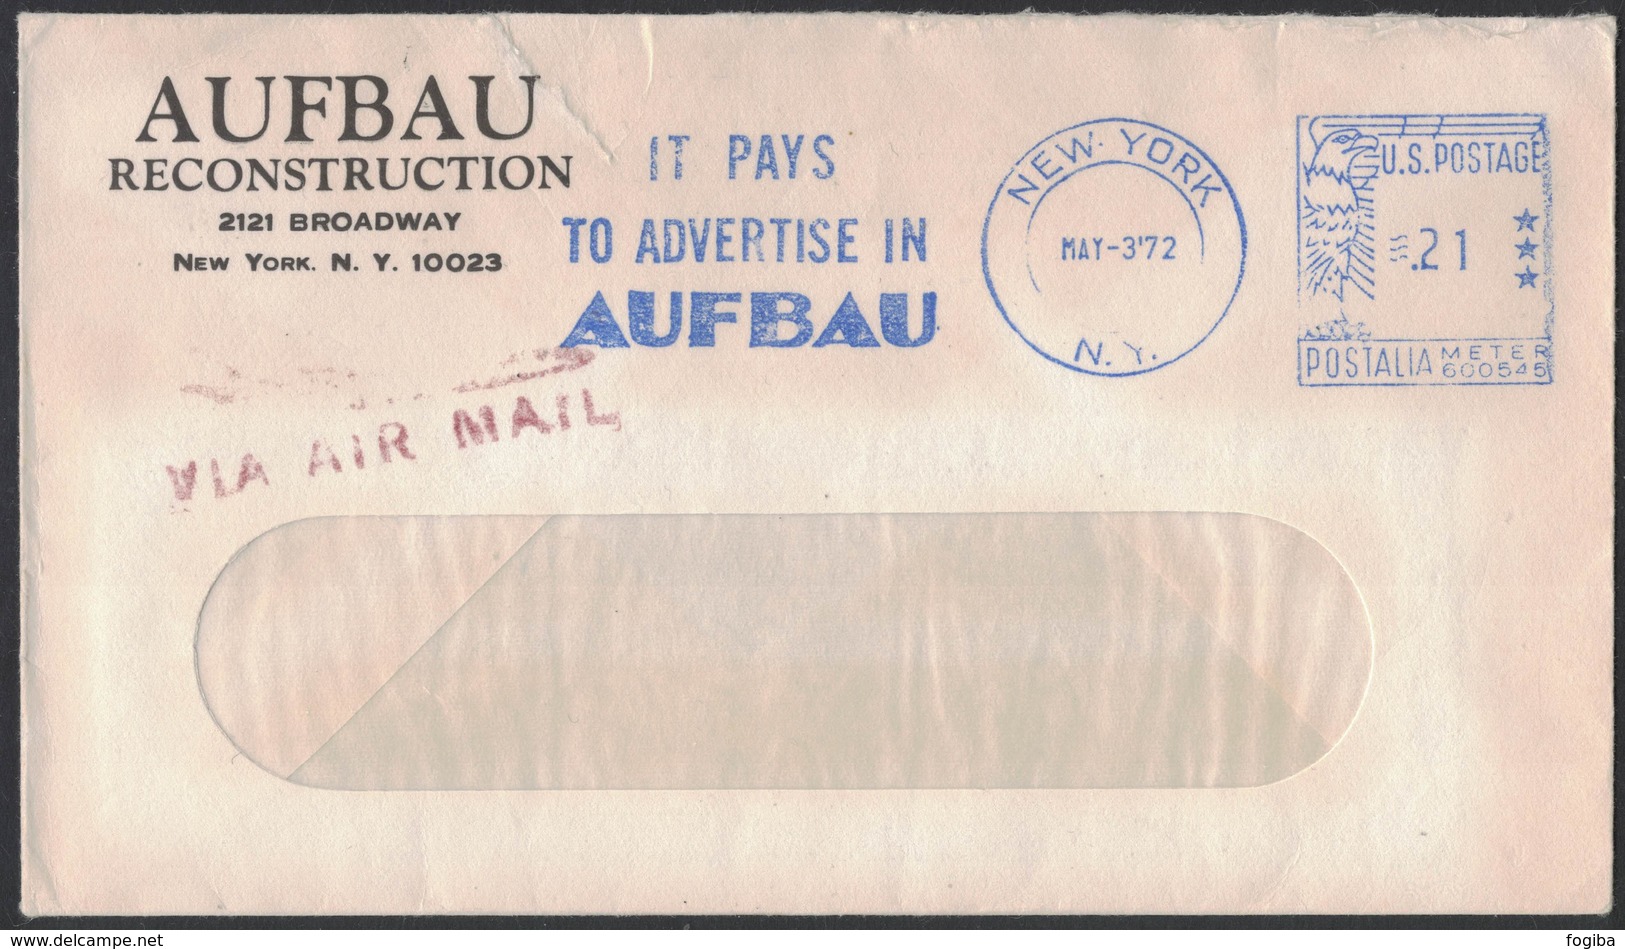 AE223   USA 1972 Cover "It Pays To Advertise In Aufbau" Meter Slogan Pmk  New York - Storia Postale